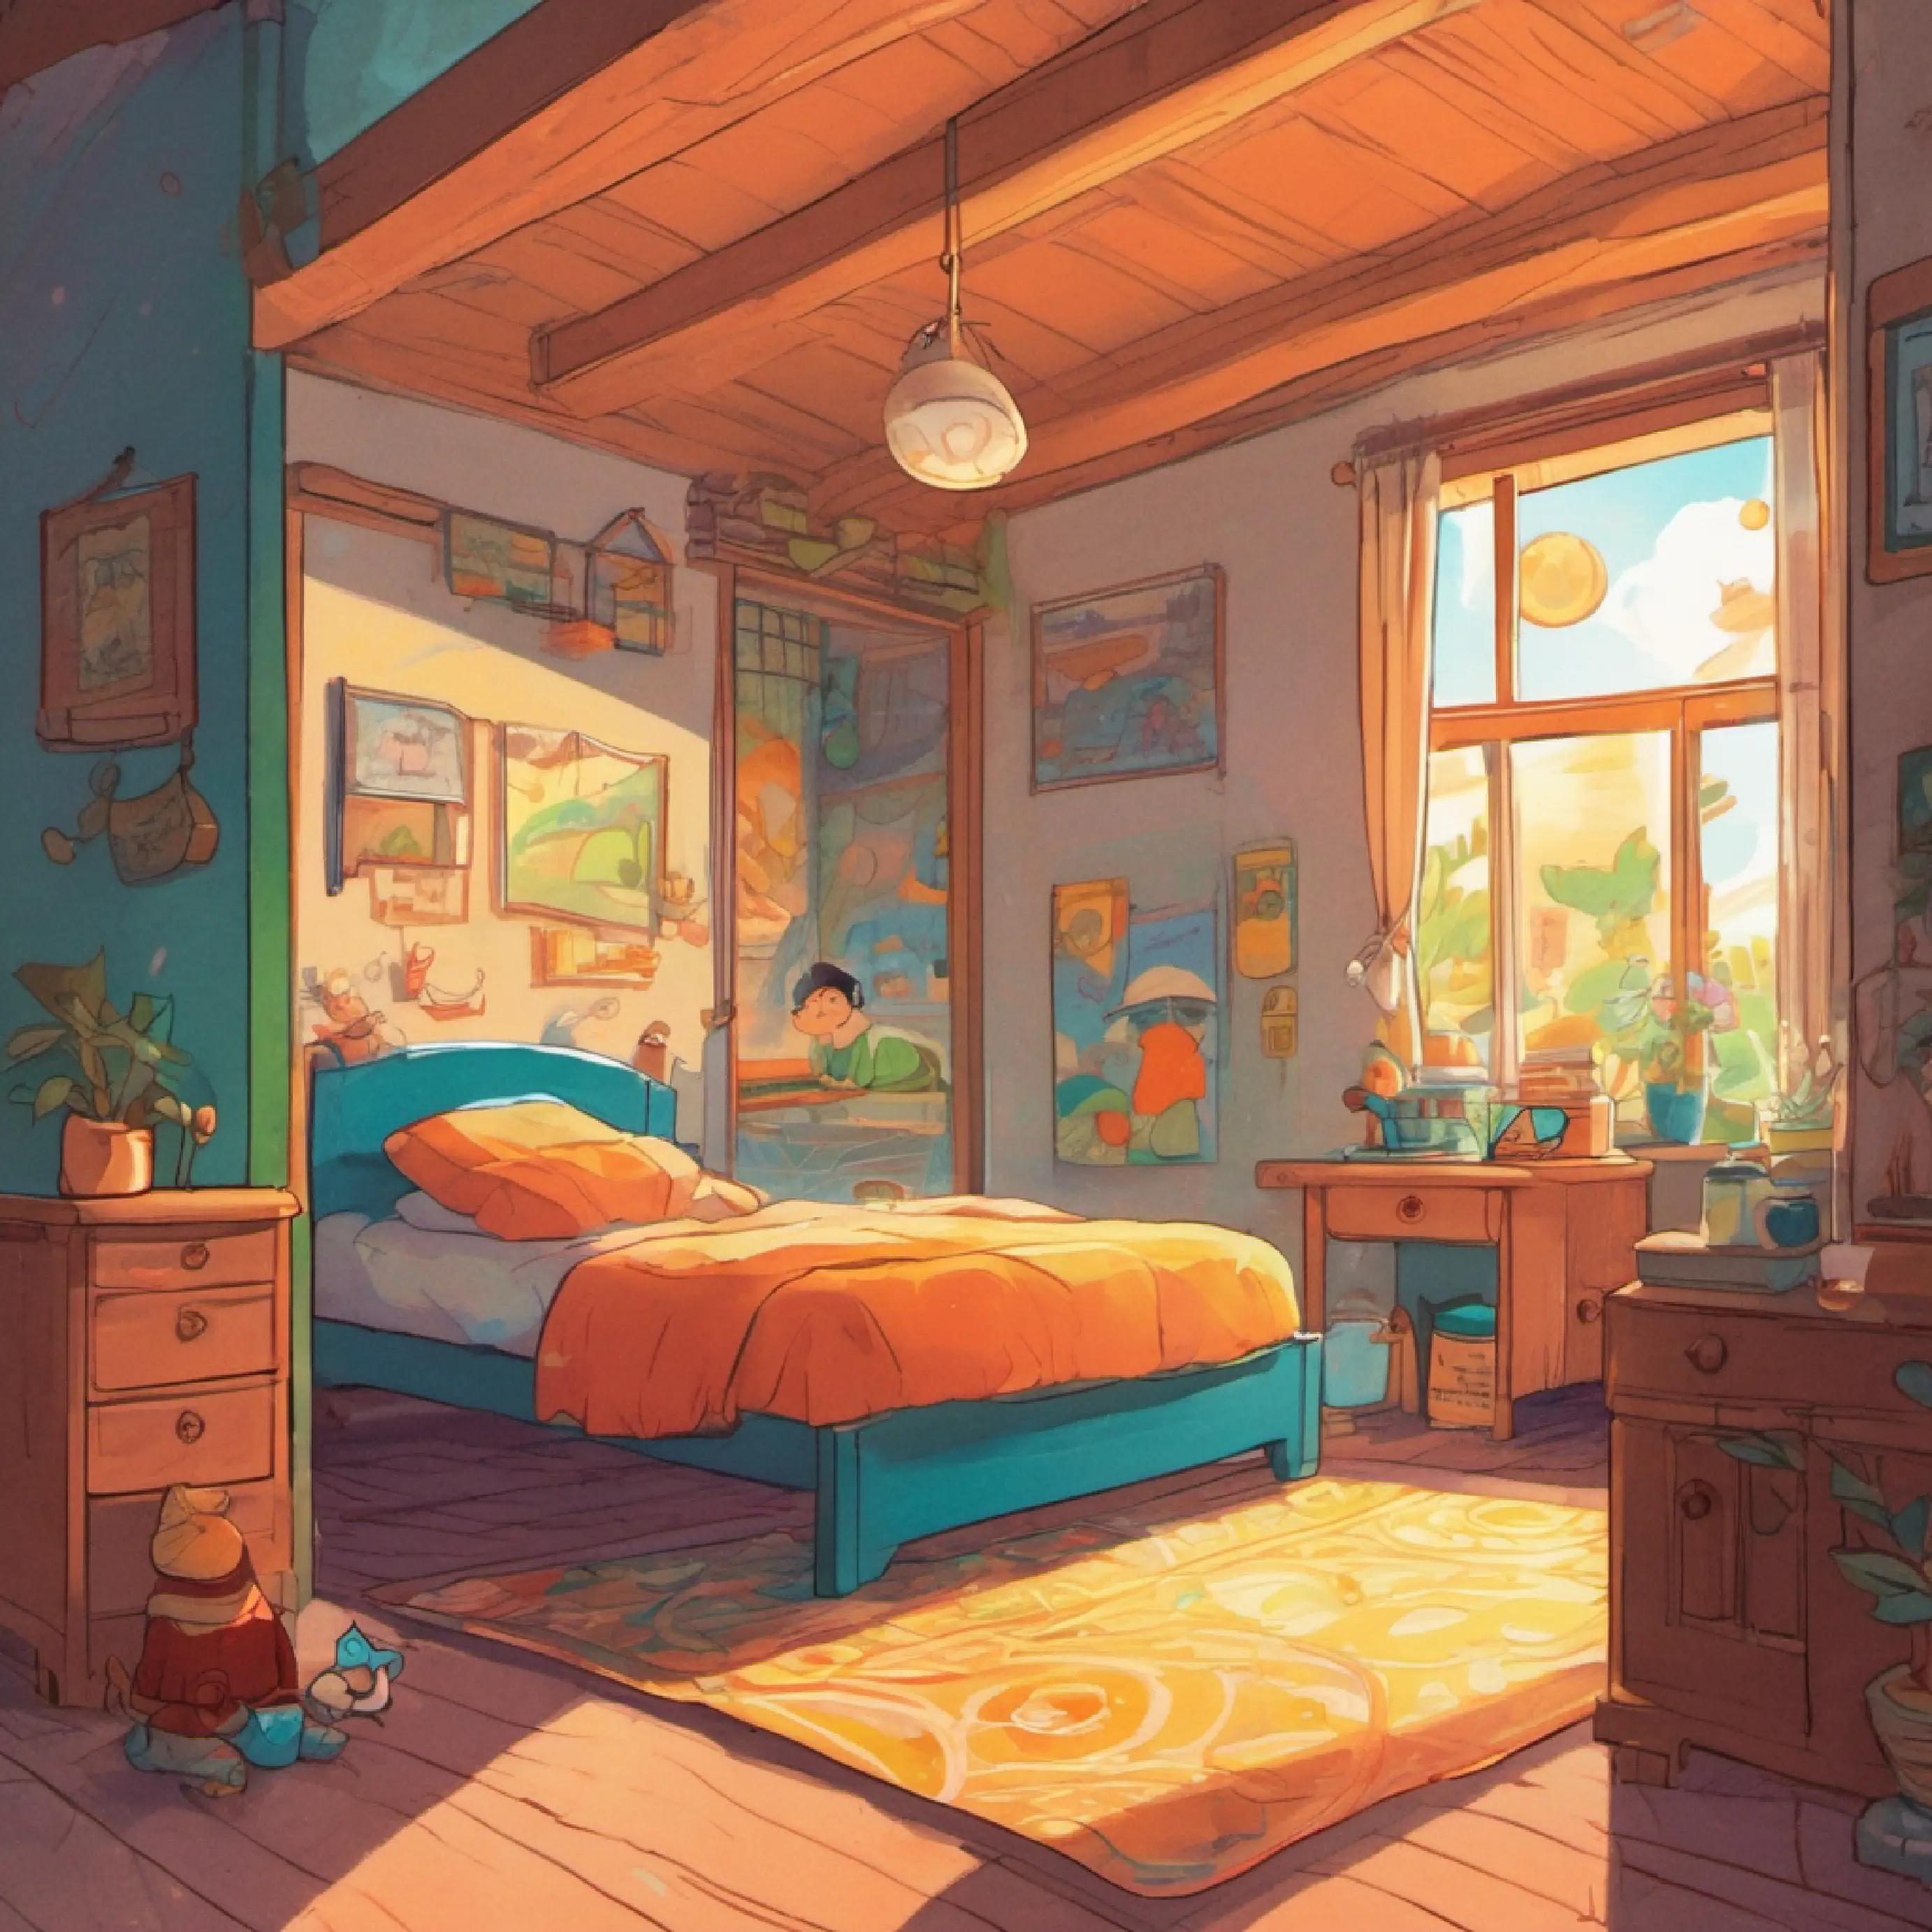 Xiao Zhu Zhu wakes up in his bedroom.